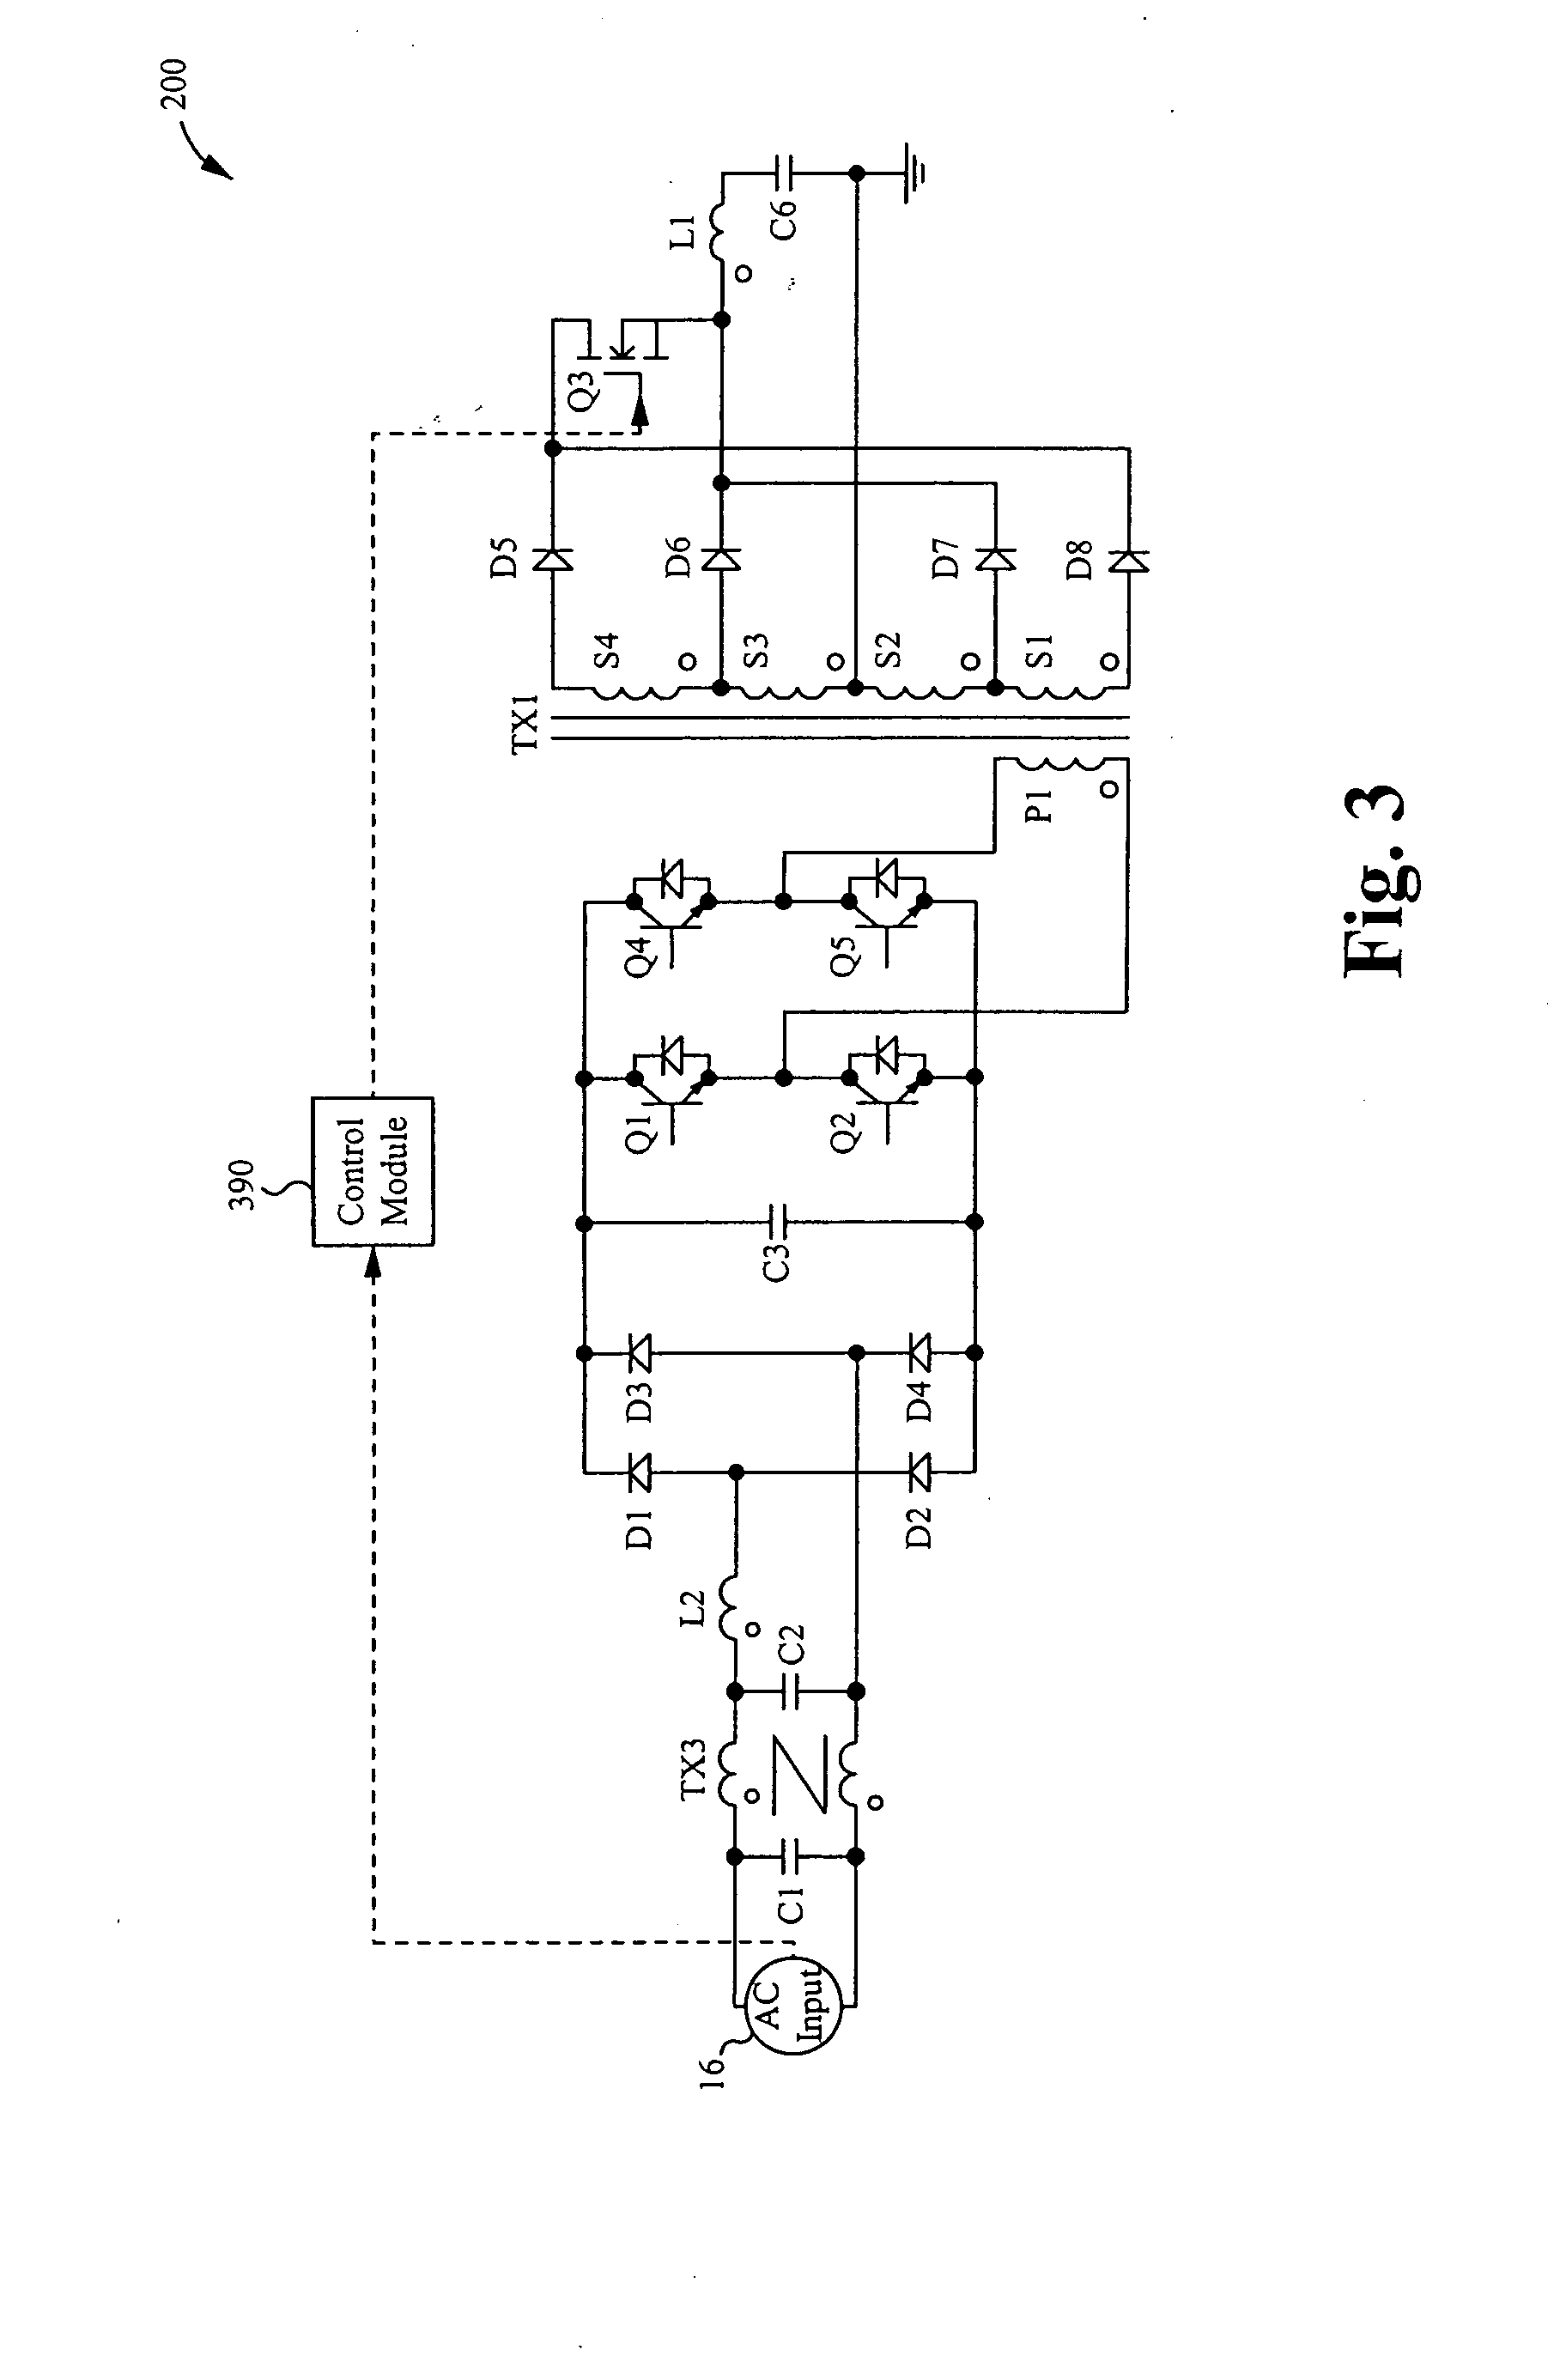 High power factor isolated buck-type power factor correction converter